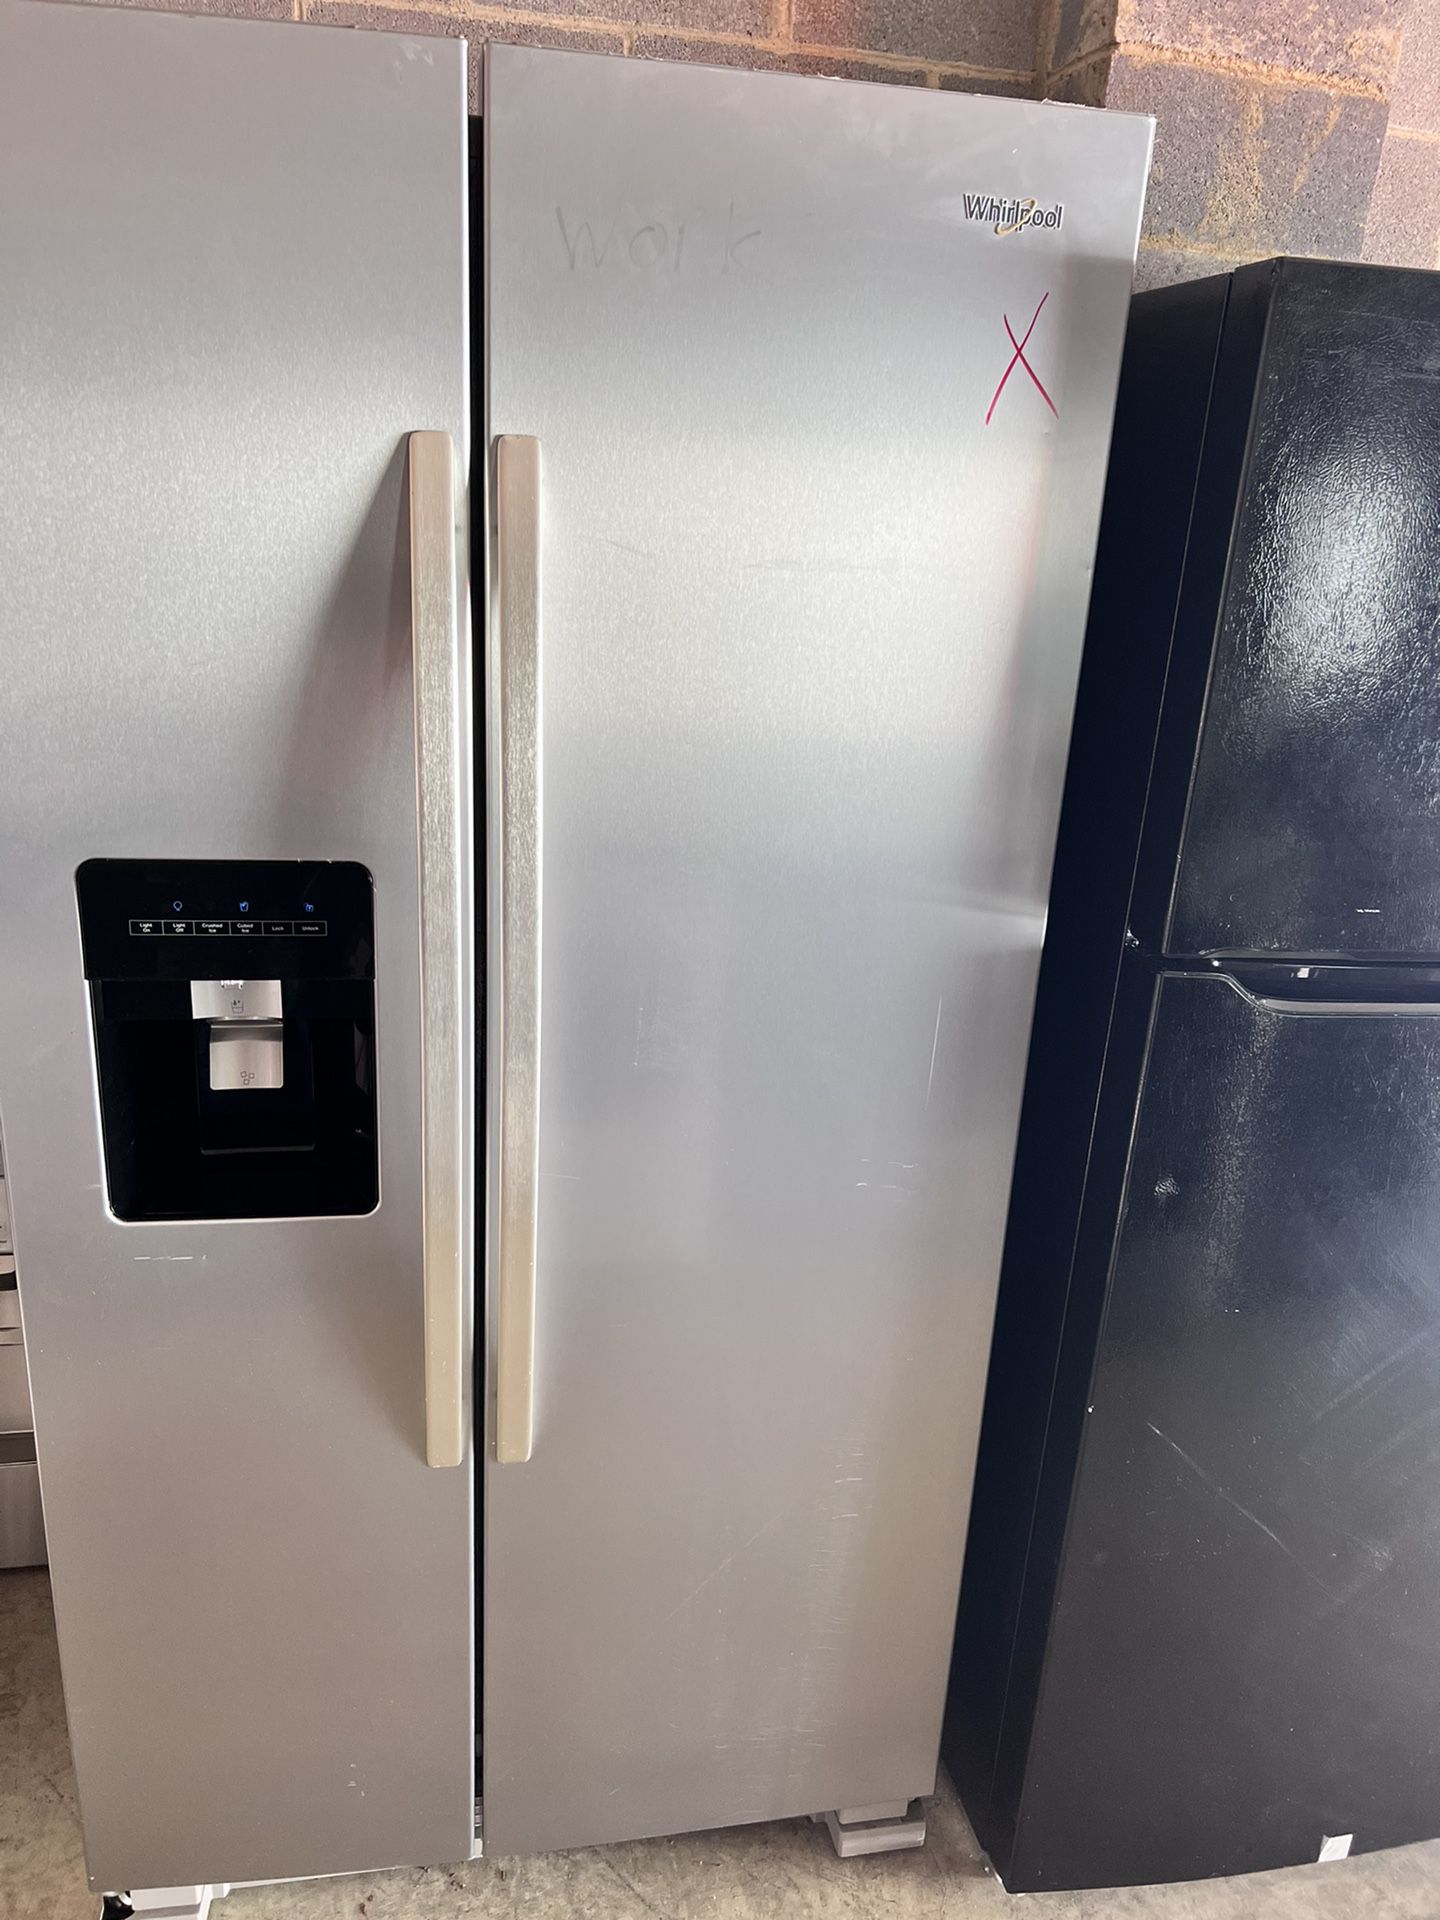 Whirlpool Refrigerator 36inc New Dents 